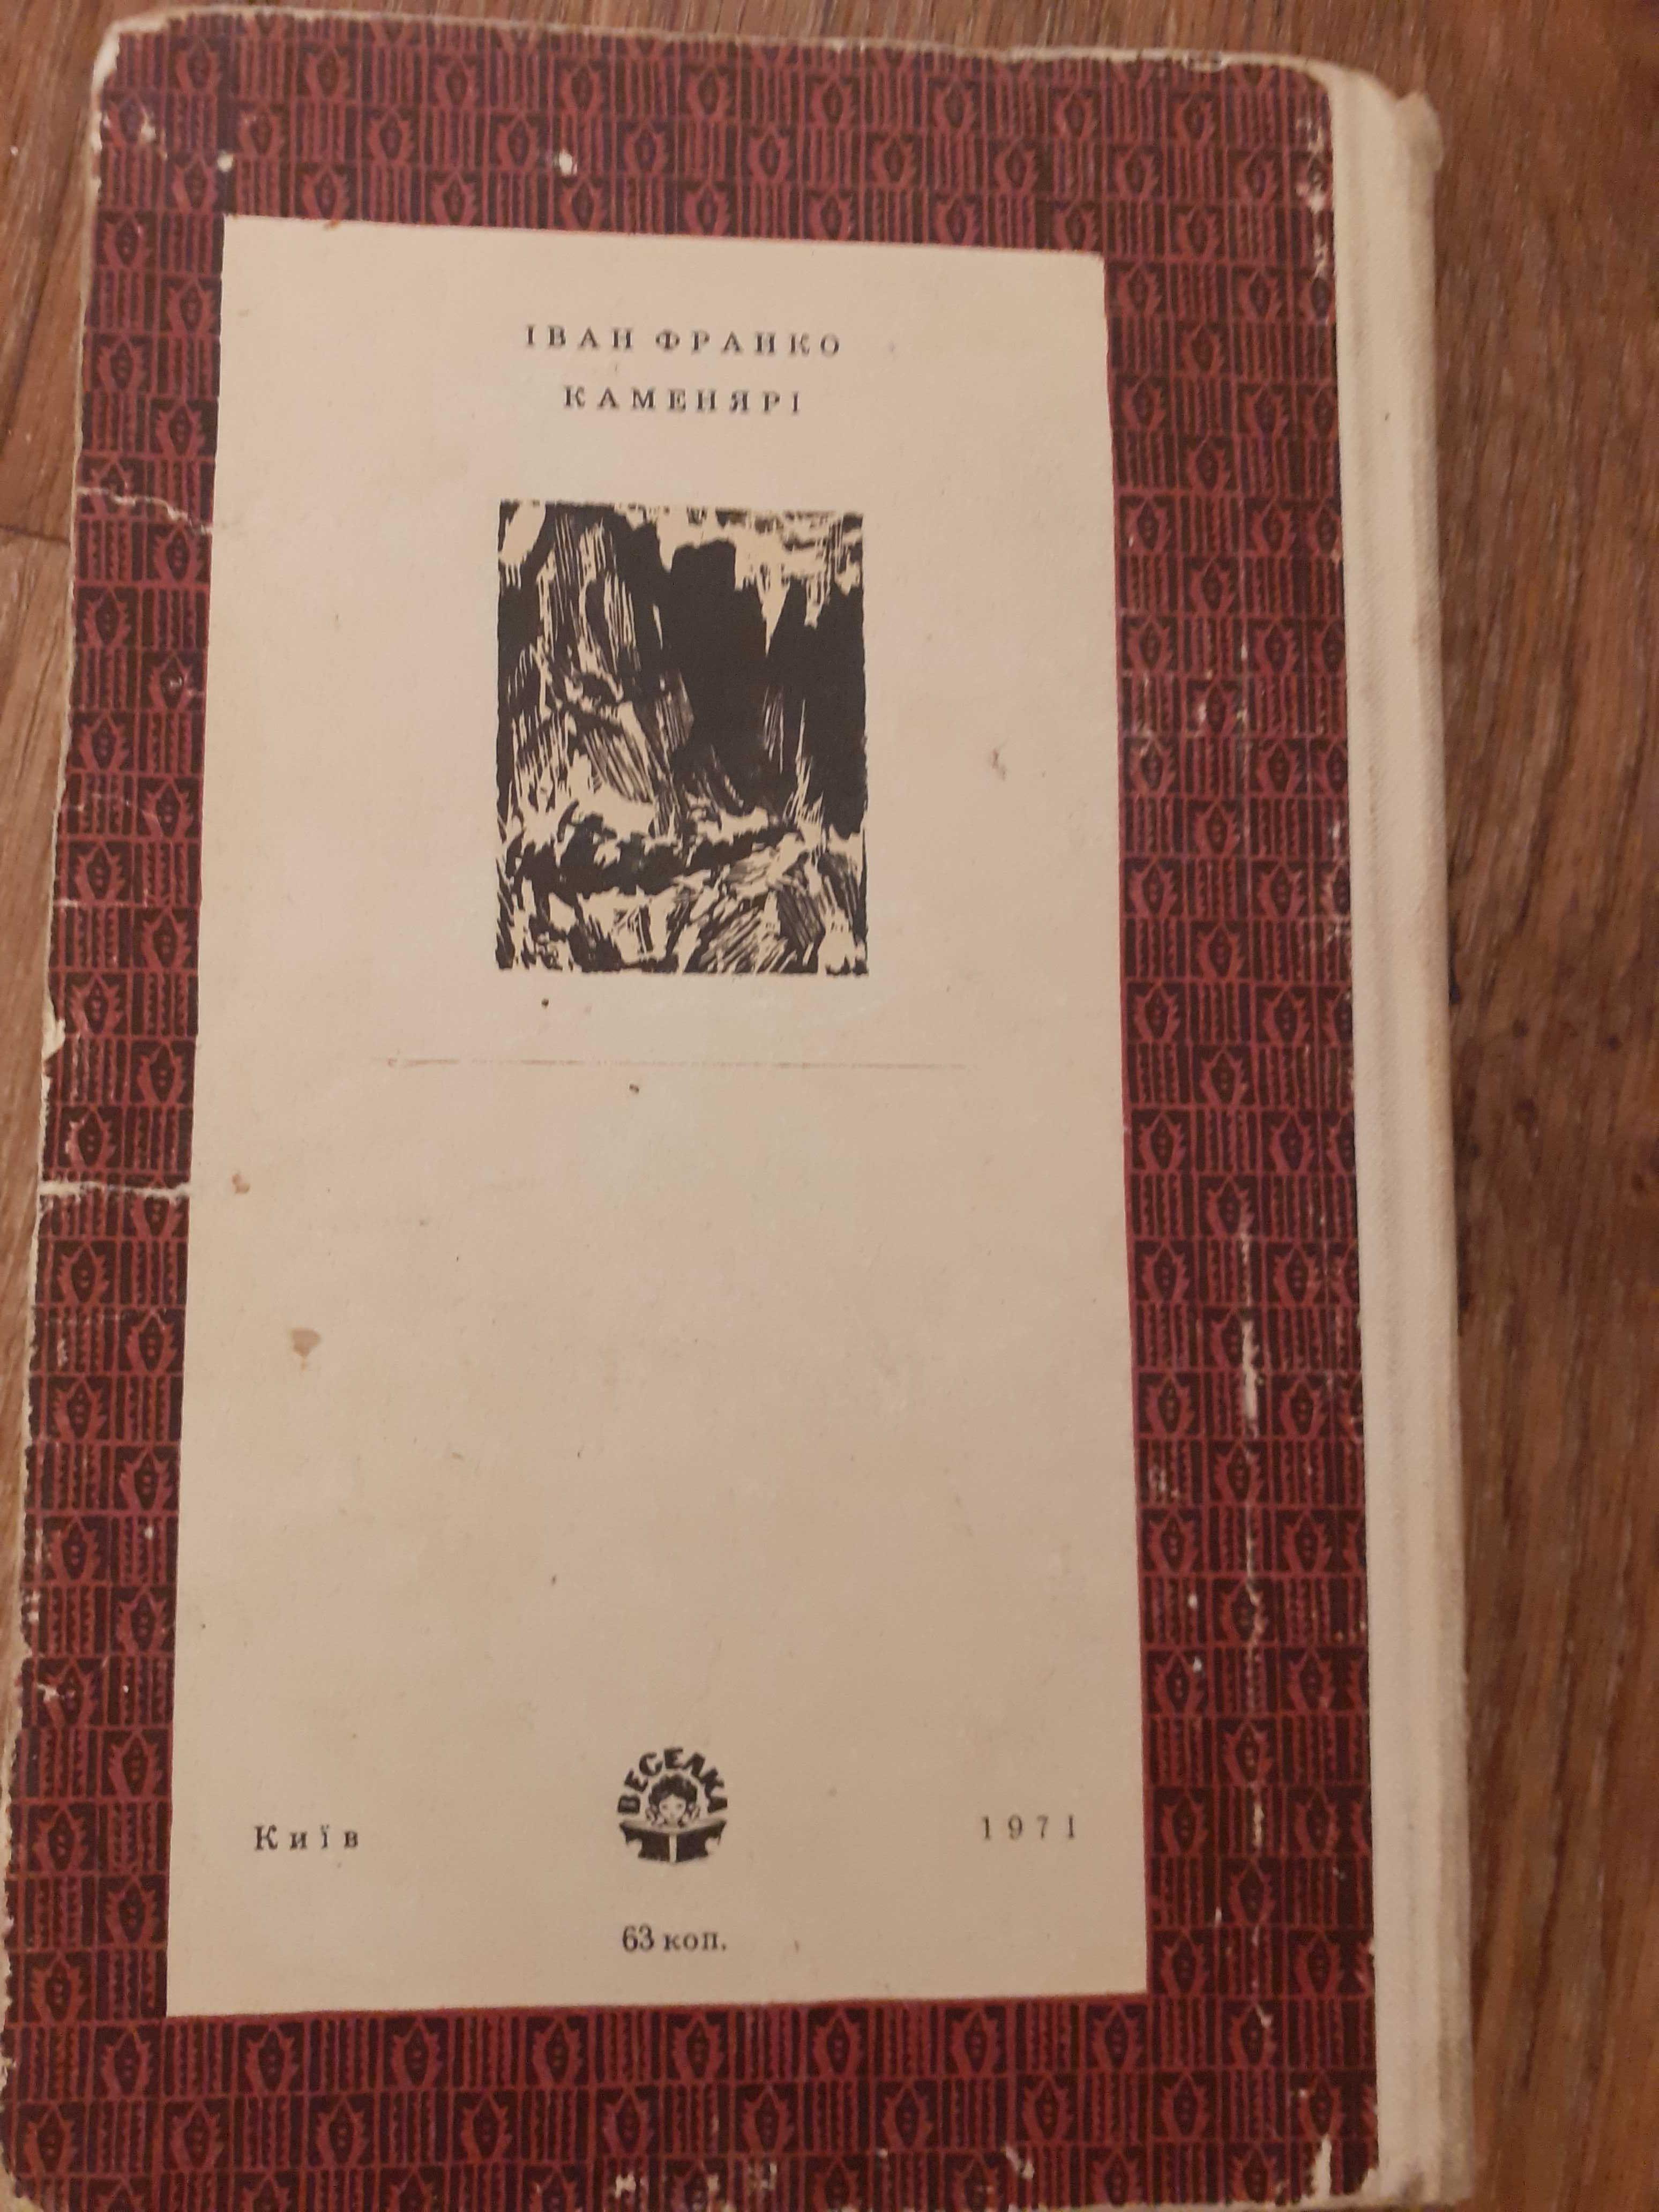 Книга lван Франко "Каменярi" 1971 року